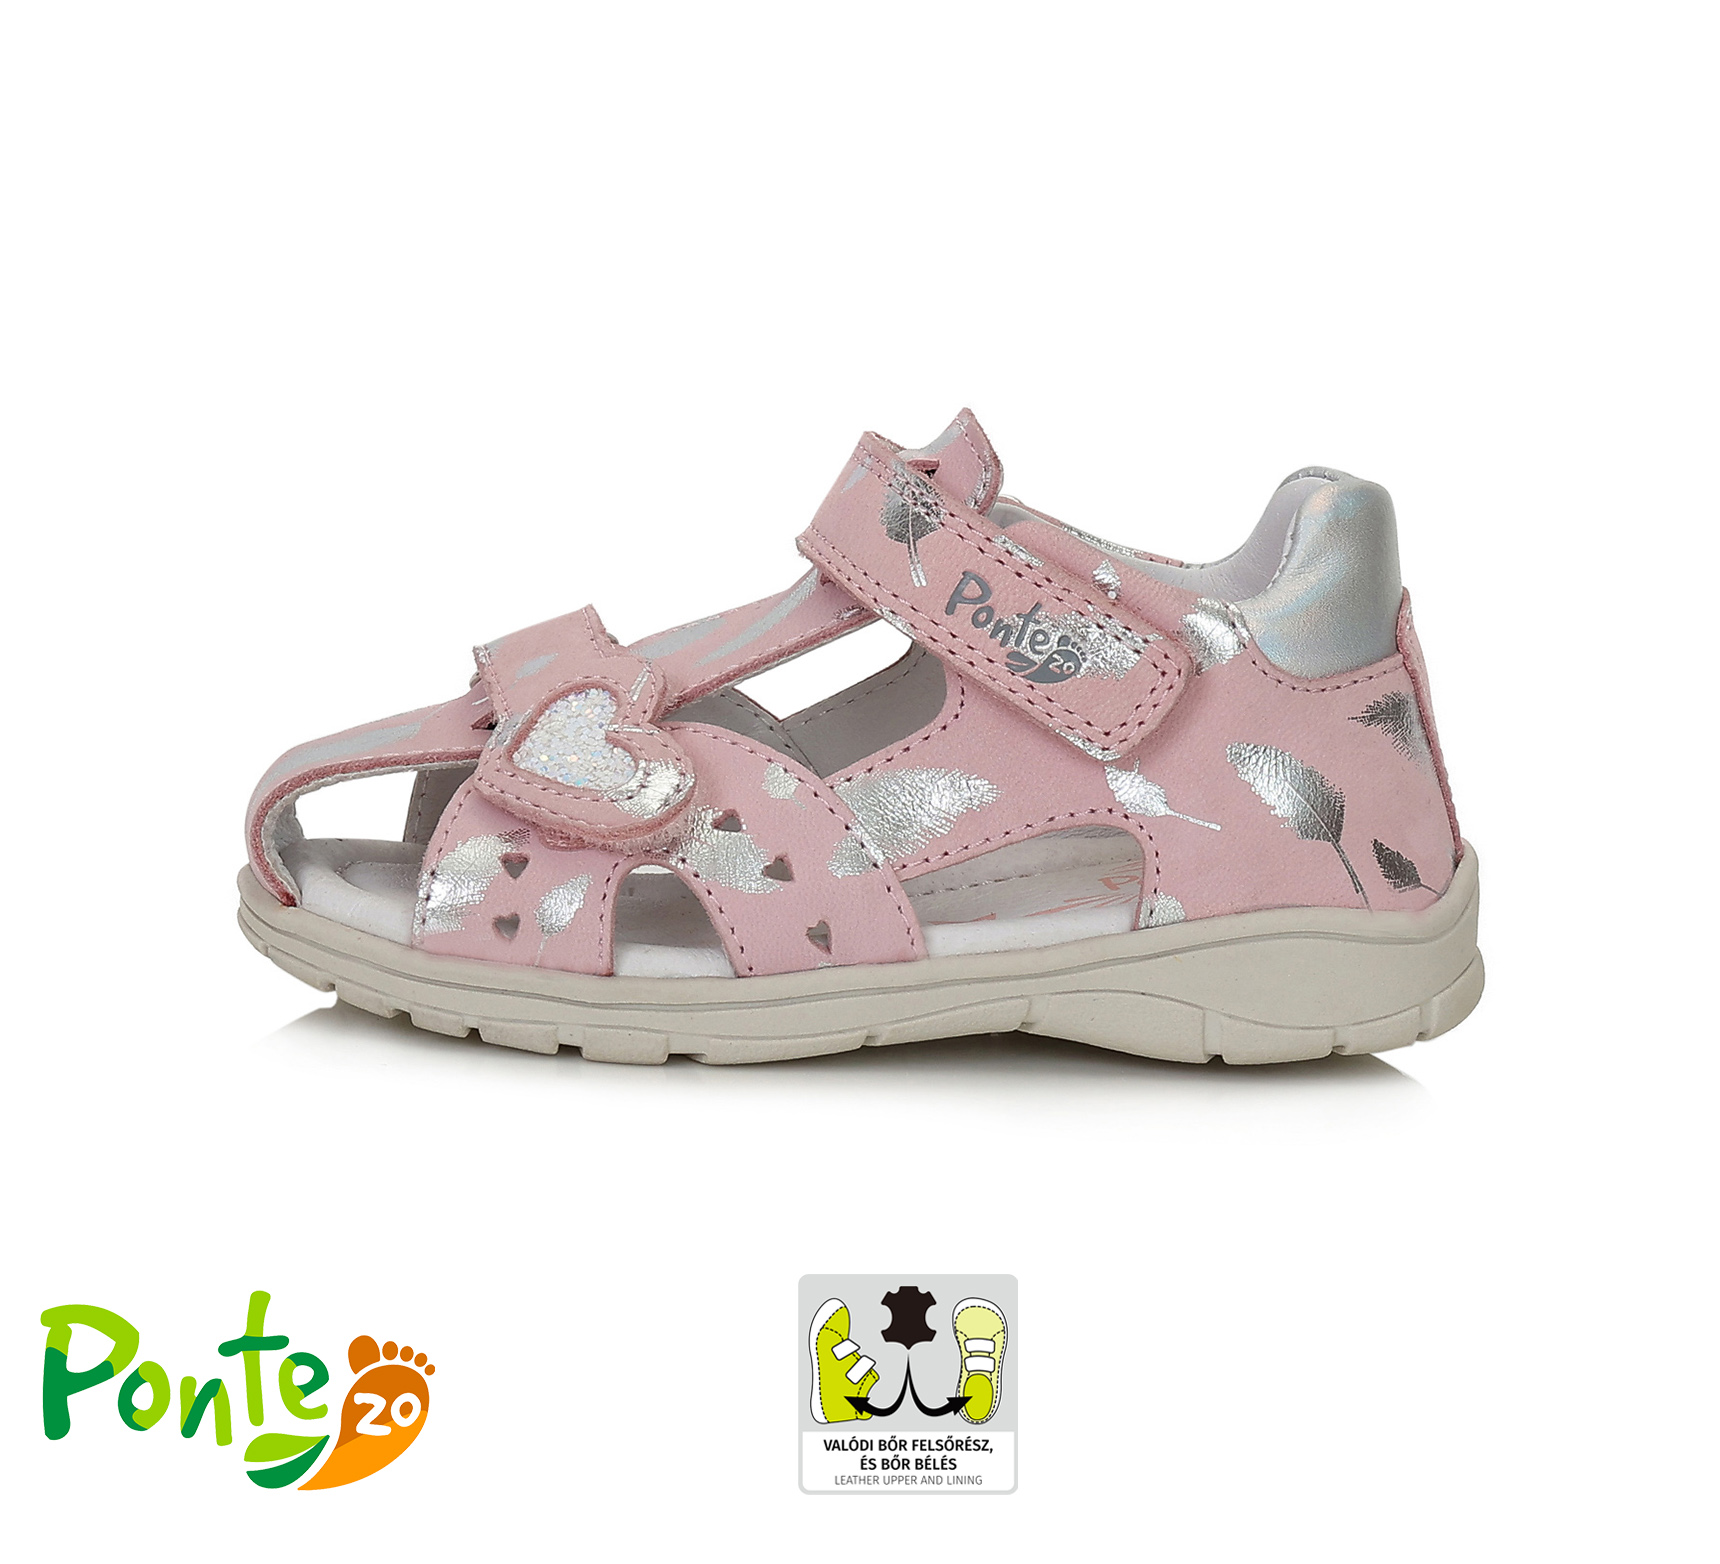 PONTE 20 dívčí kožené sandálky Pink/silver DA05-4-1949 Velikost: 25